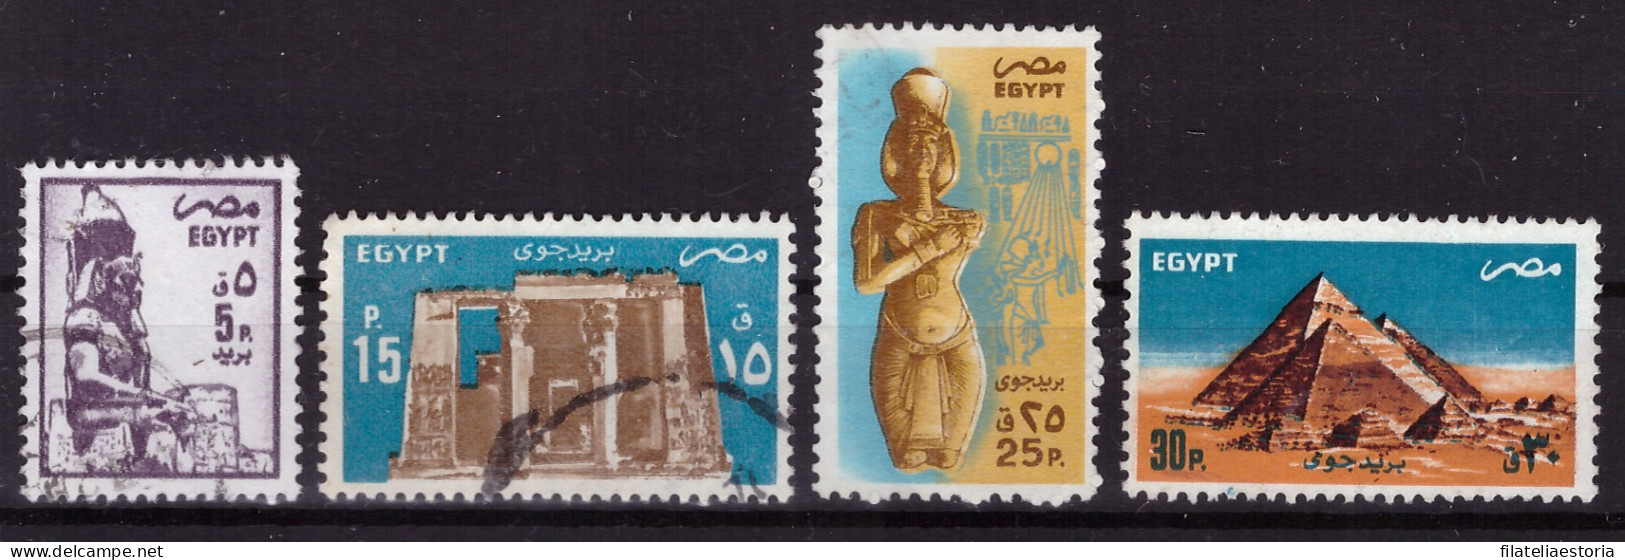 Egypte 1985/1998 - Oblitéré - Monuments - Art - Michel Nr. 1501 1506 1509-1510 (egy361) - Used Stamps